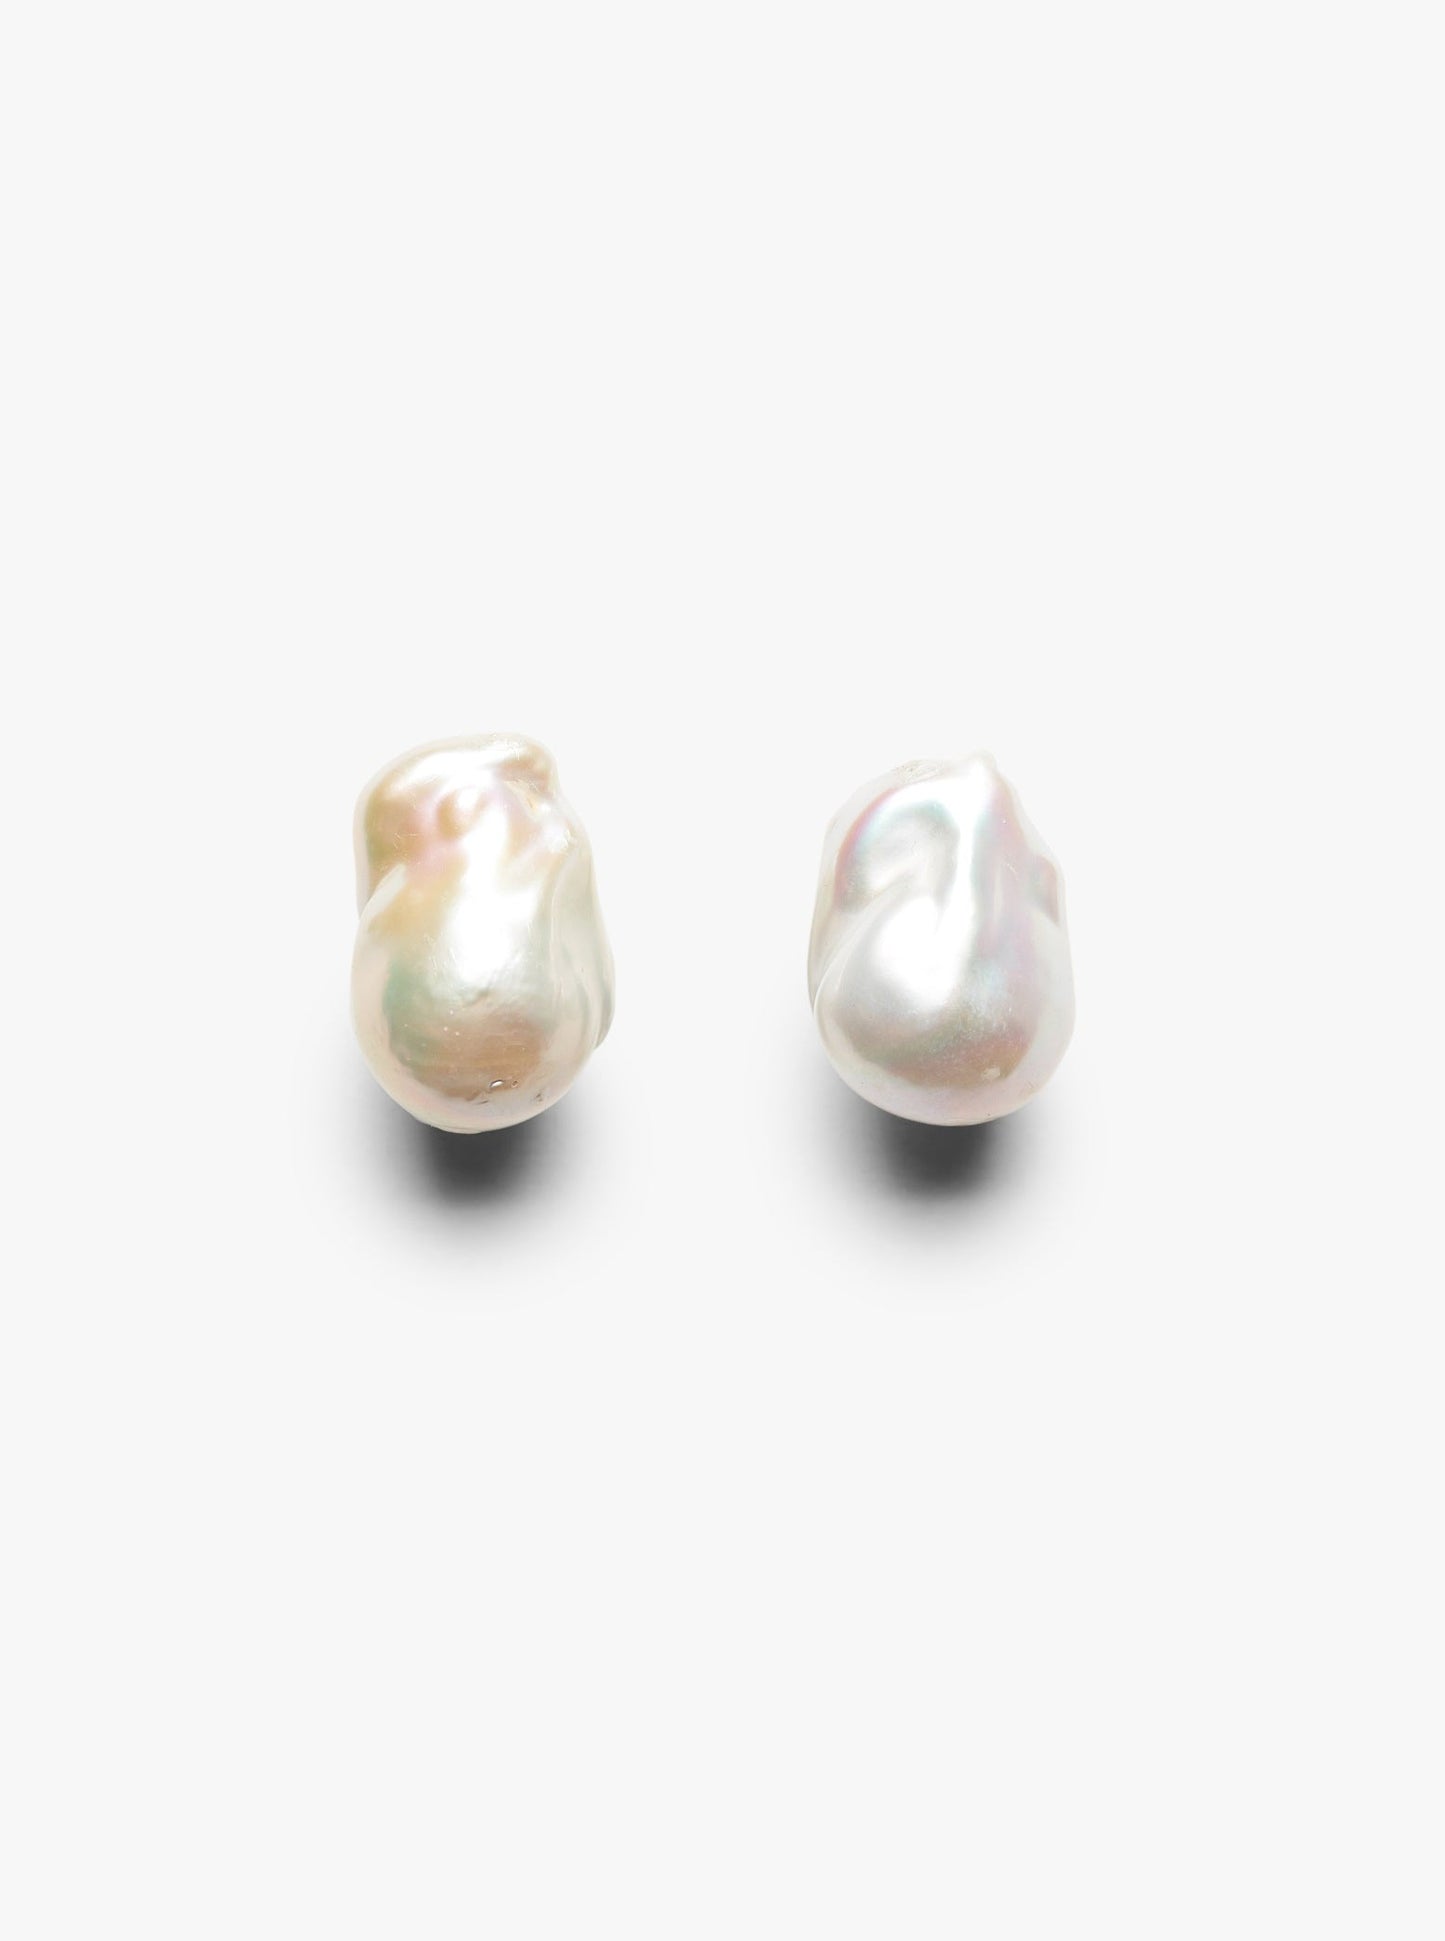 Mint earclips: baroque pearls